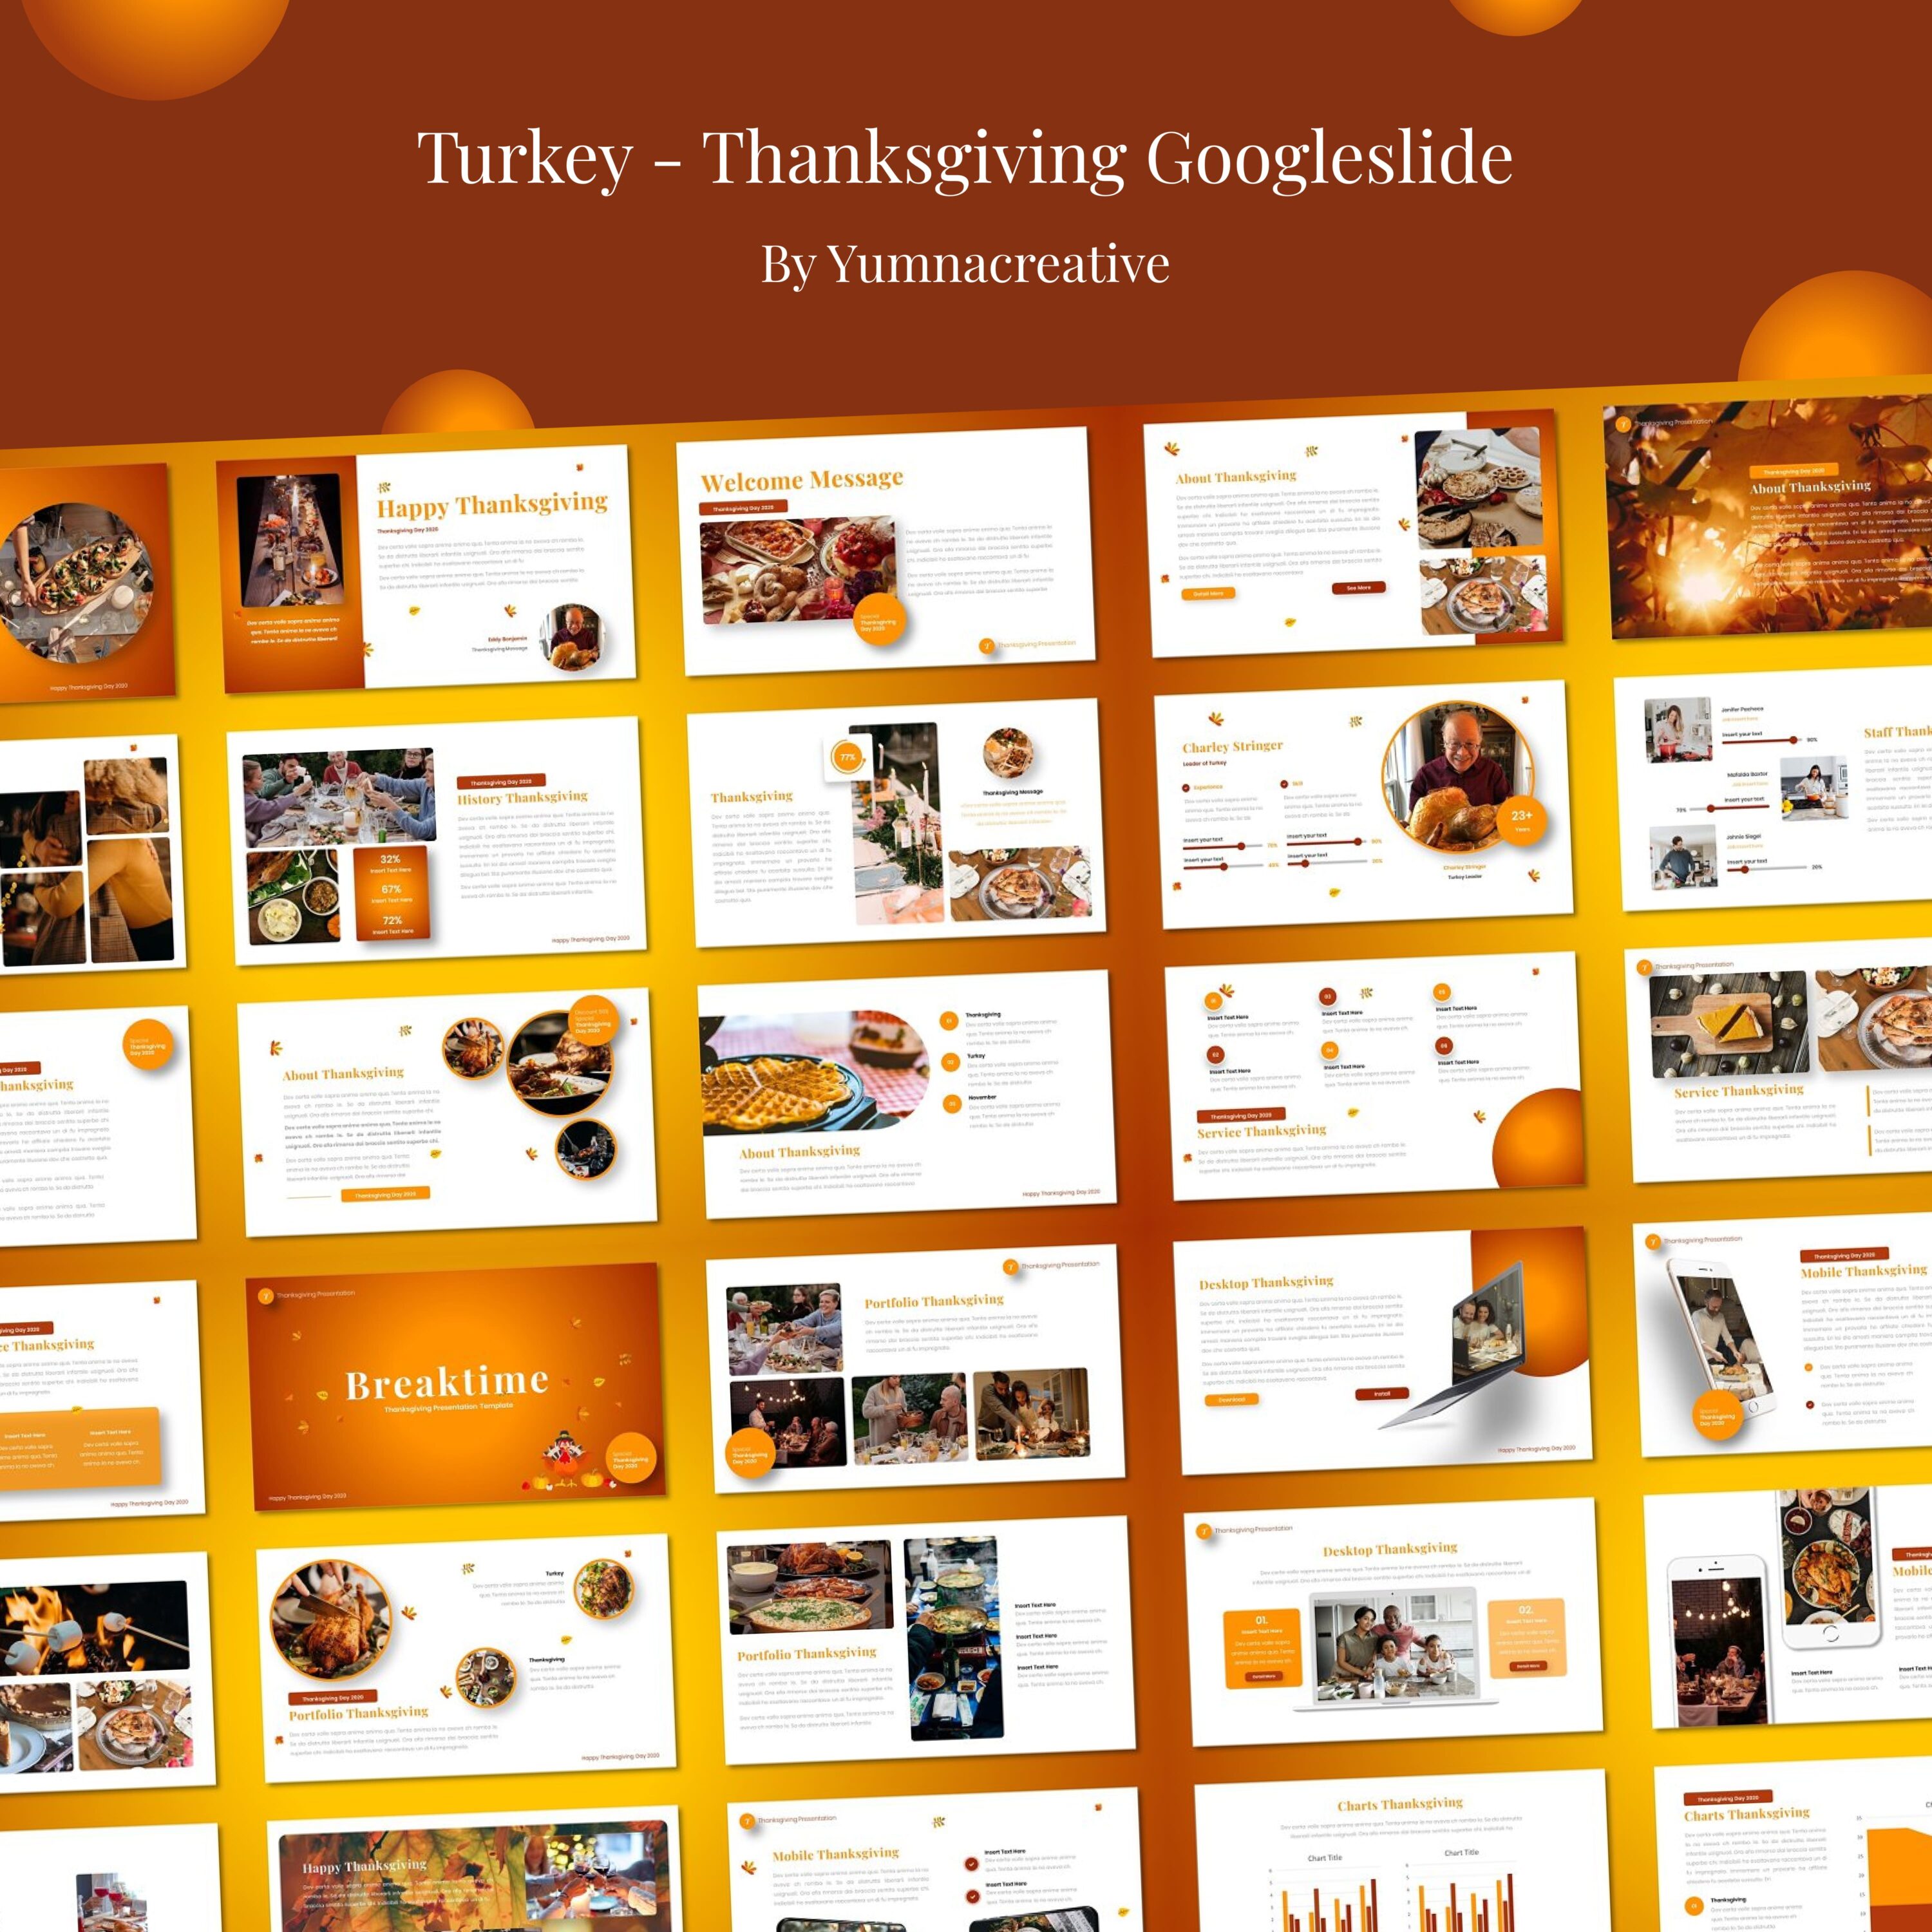 Turkey Thanksgiving Google Slide - main image preview.